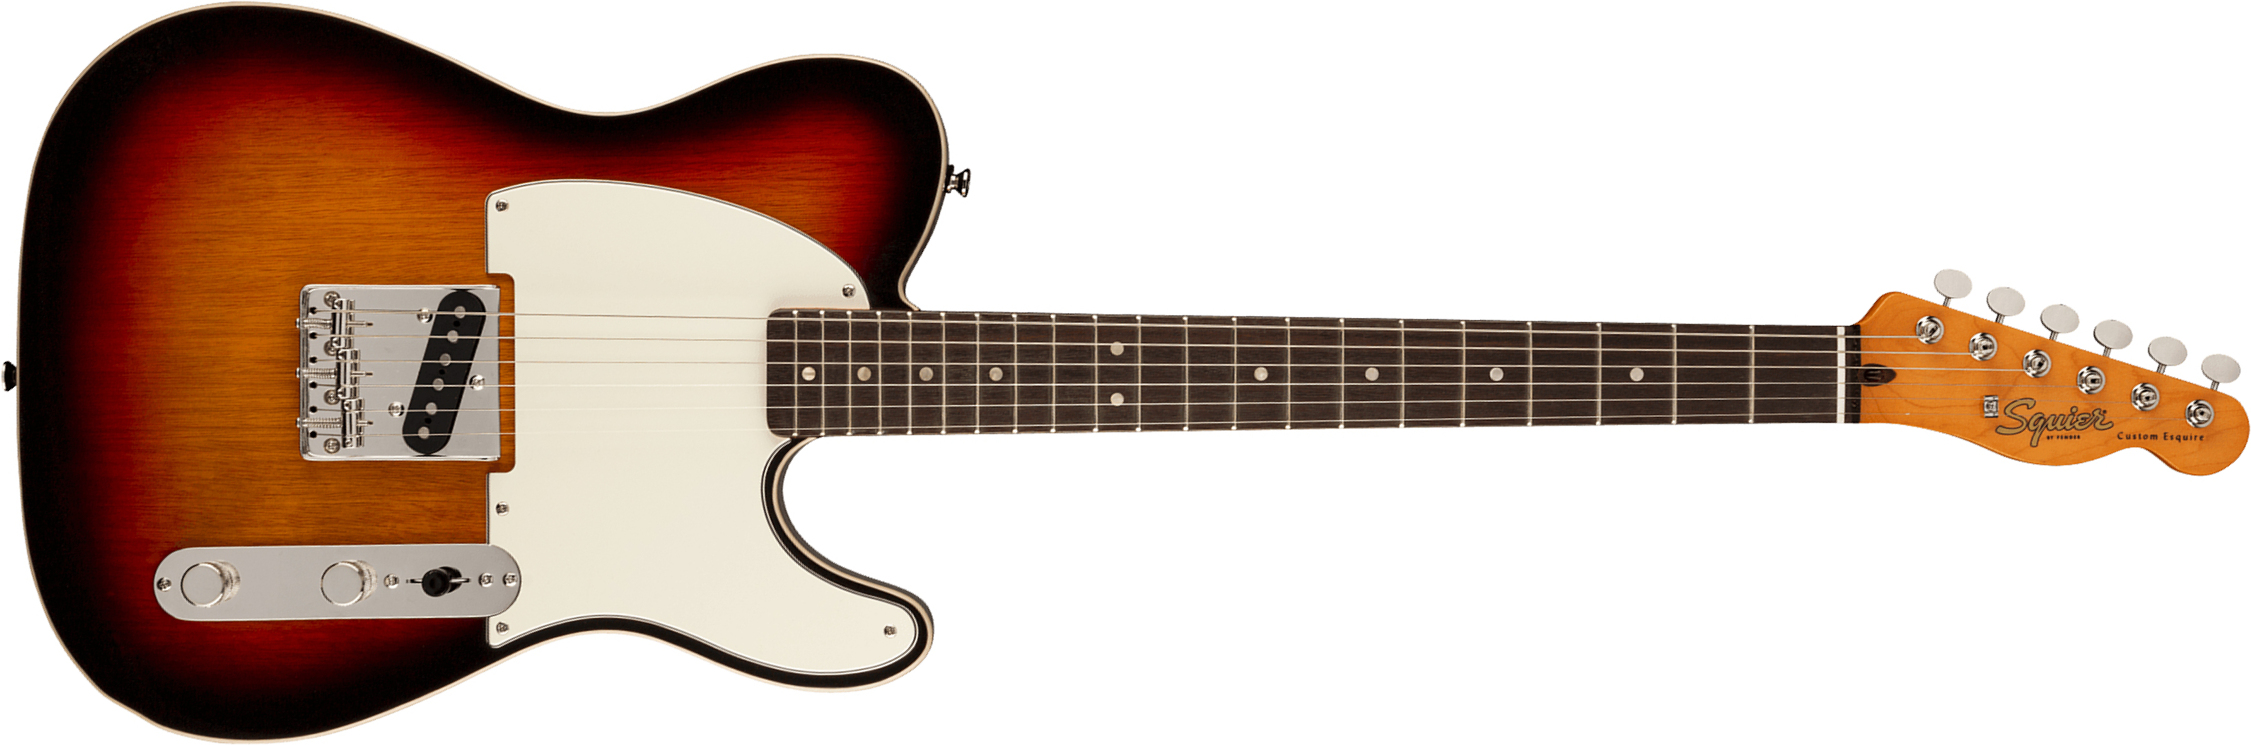 Squier Esquire Tele '60s Custom Classic Vibe Fsr Ltd Lau - 3 Color Sunburst - Televorm elektrische gitaar - Main picture